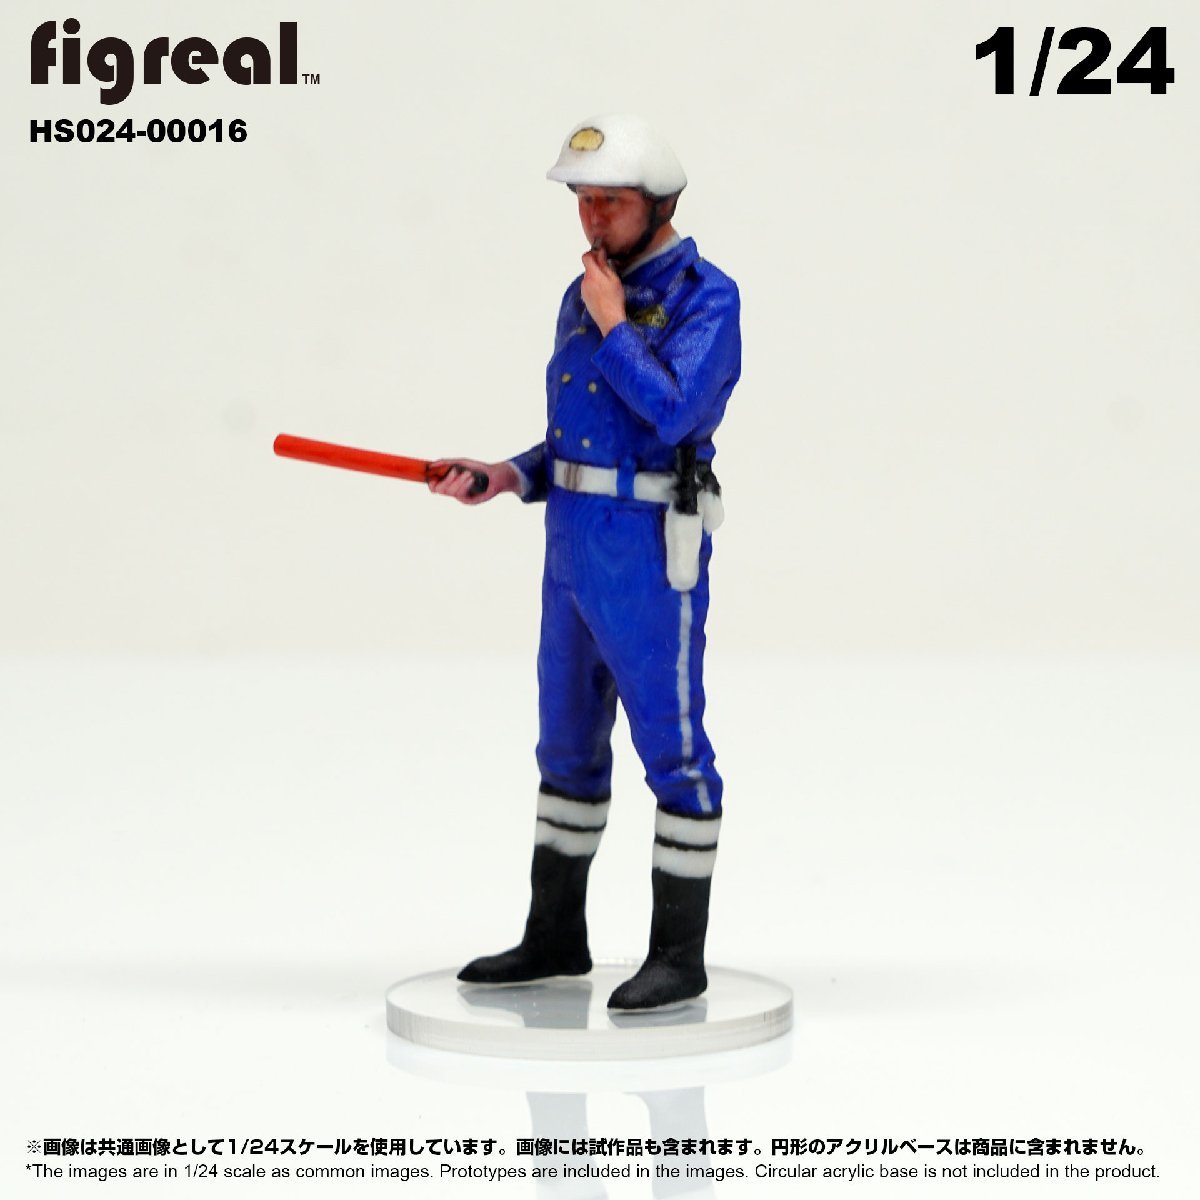 HS024-00016 figreal 日本交通機動隊 1/24 高精細フィギュア_画像3